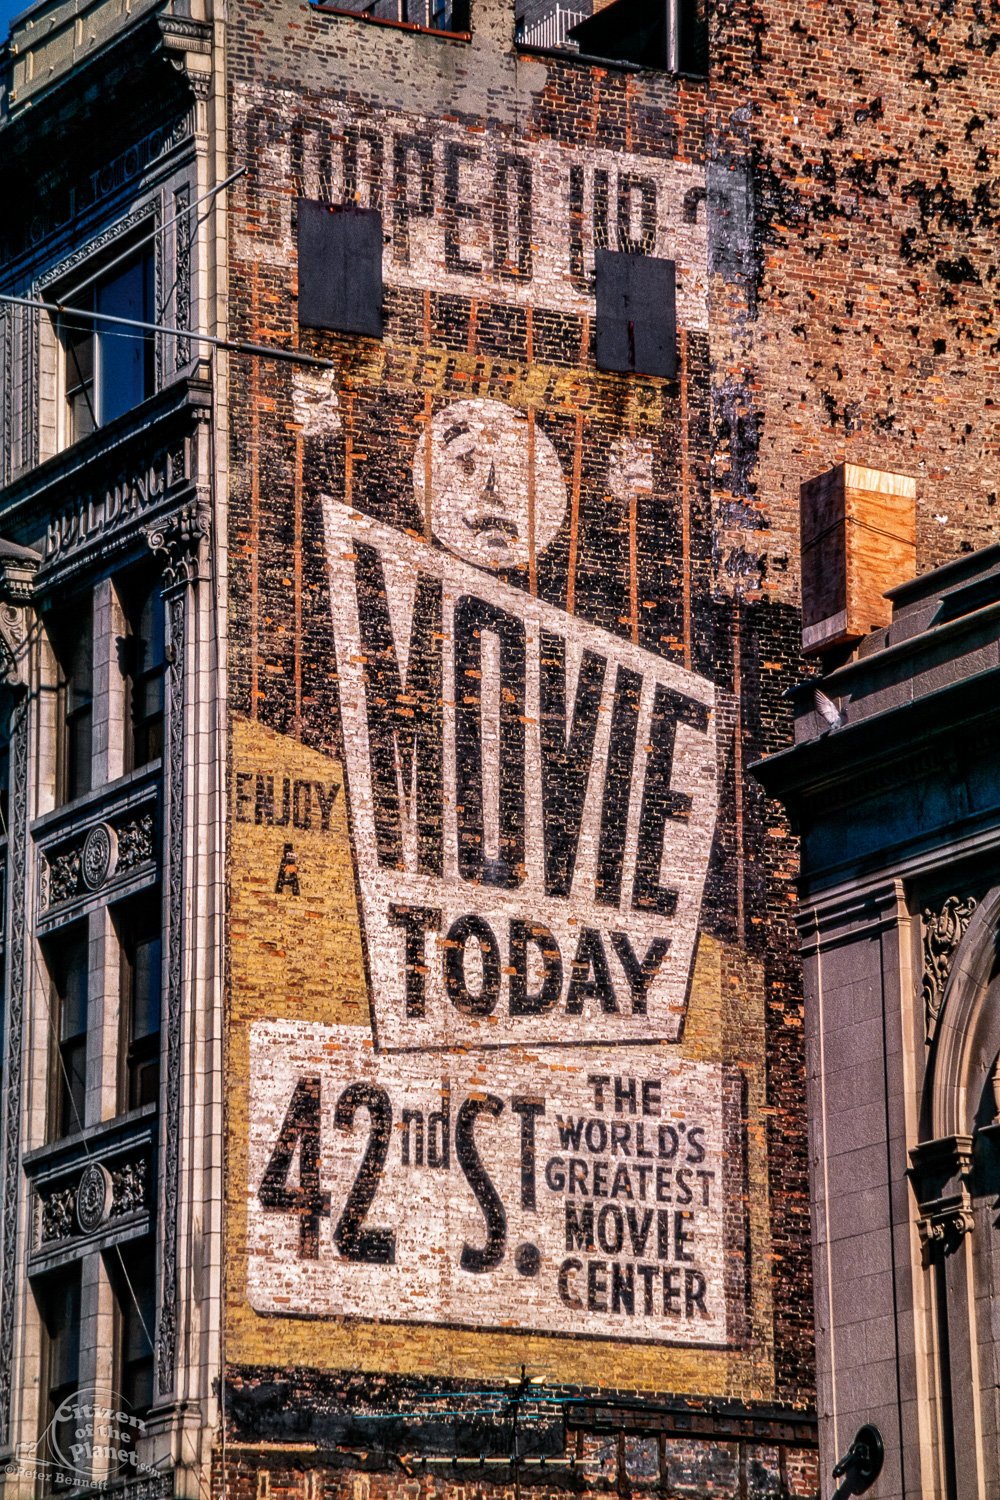 Enjoy a Movie Today, 42nd Street, 1986